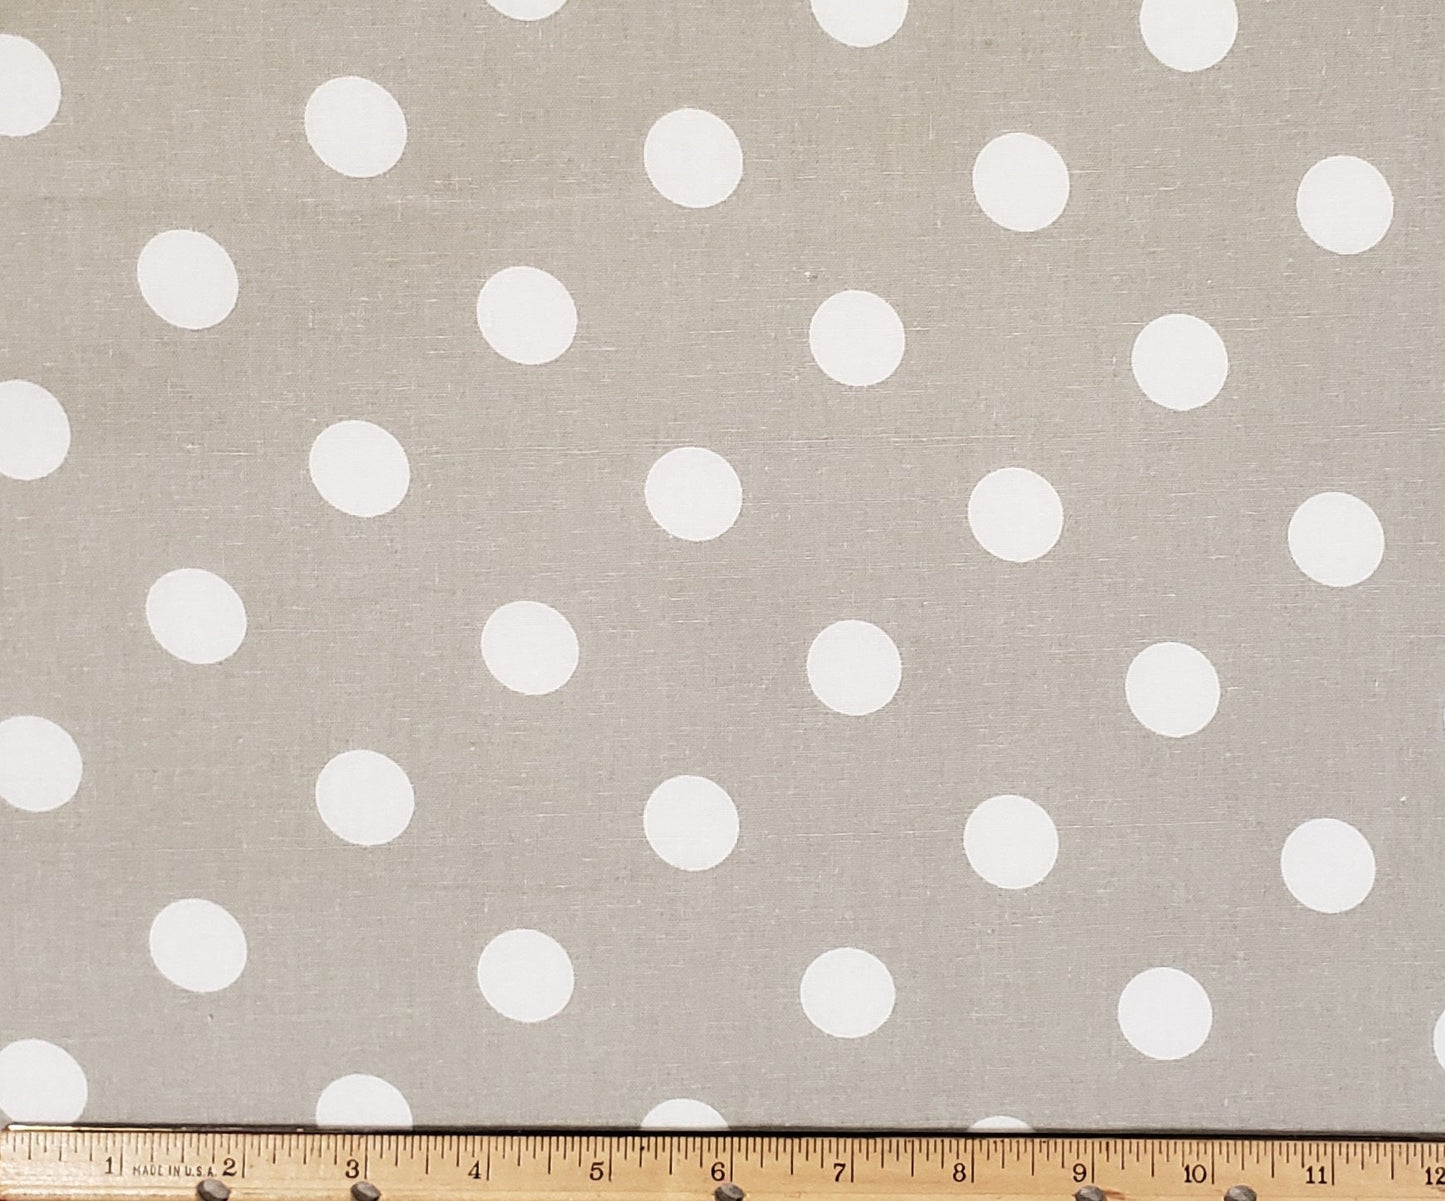 EOB - Keepsake Calico JoAnn Fabric - Gray Fabric with Large White Polka Dots